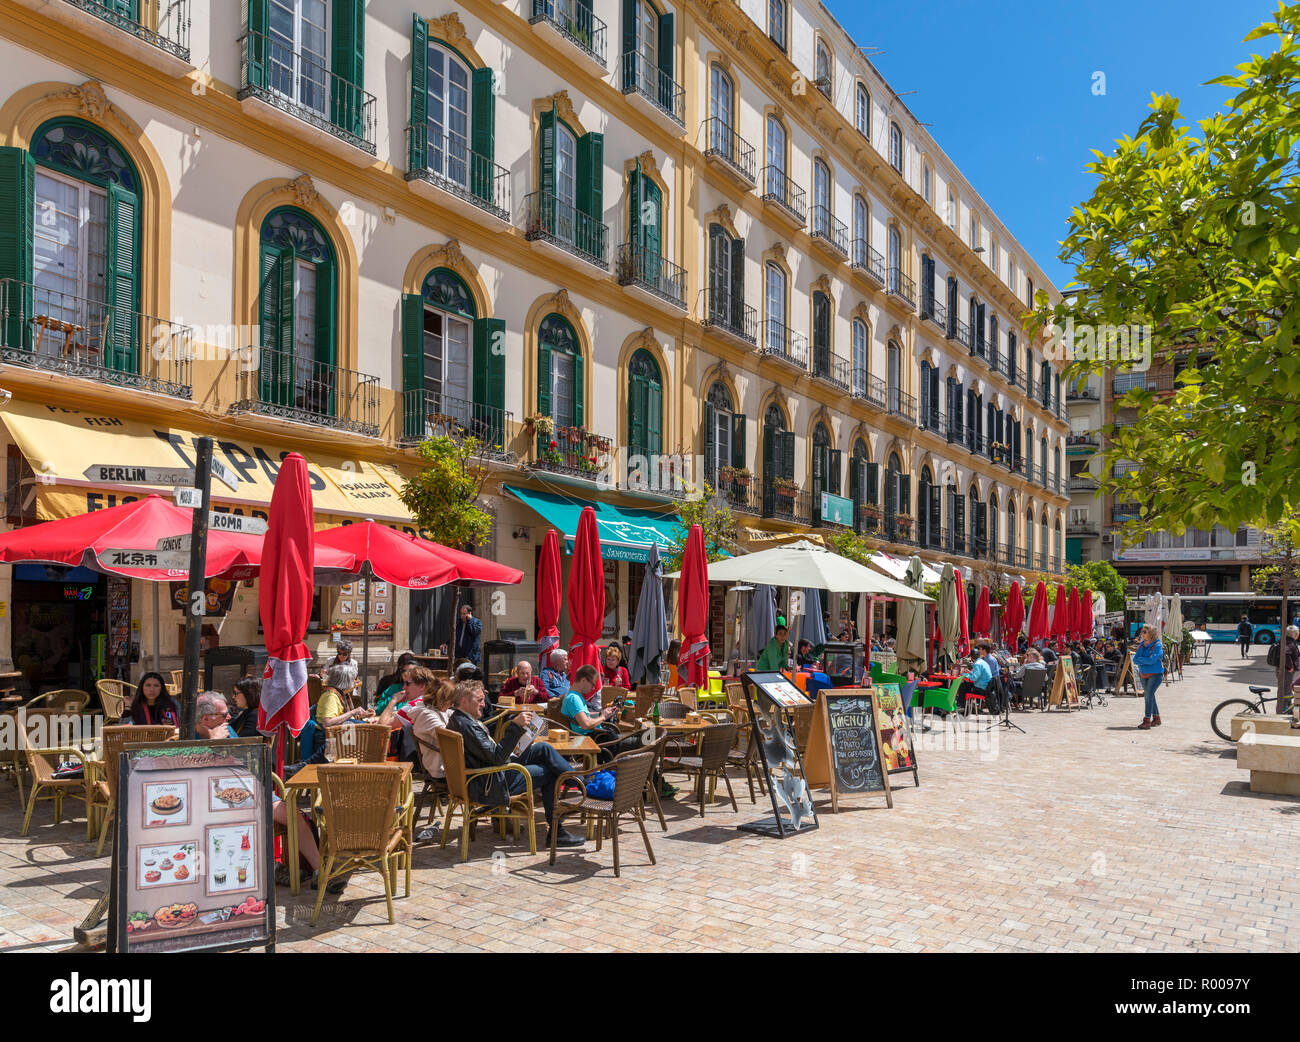 Cafes and restaurants in the old town, Plaza de la Merced, Malaga, Costa del Sol, Andalucia, Spain Stock Photo